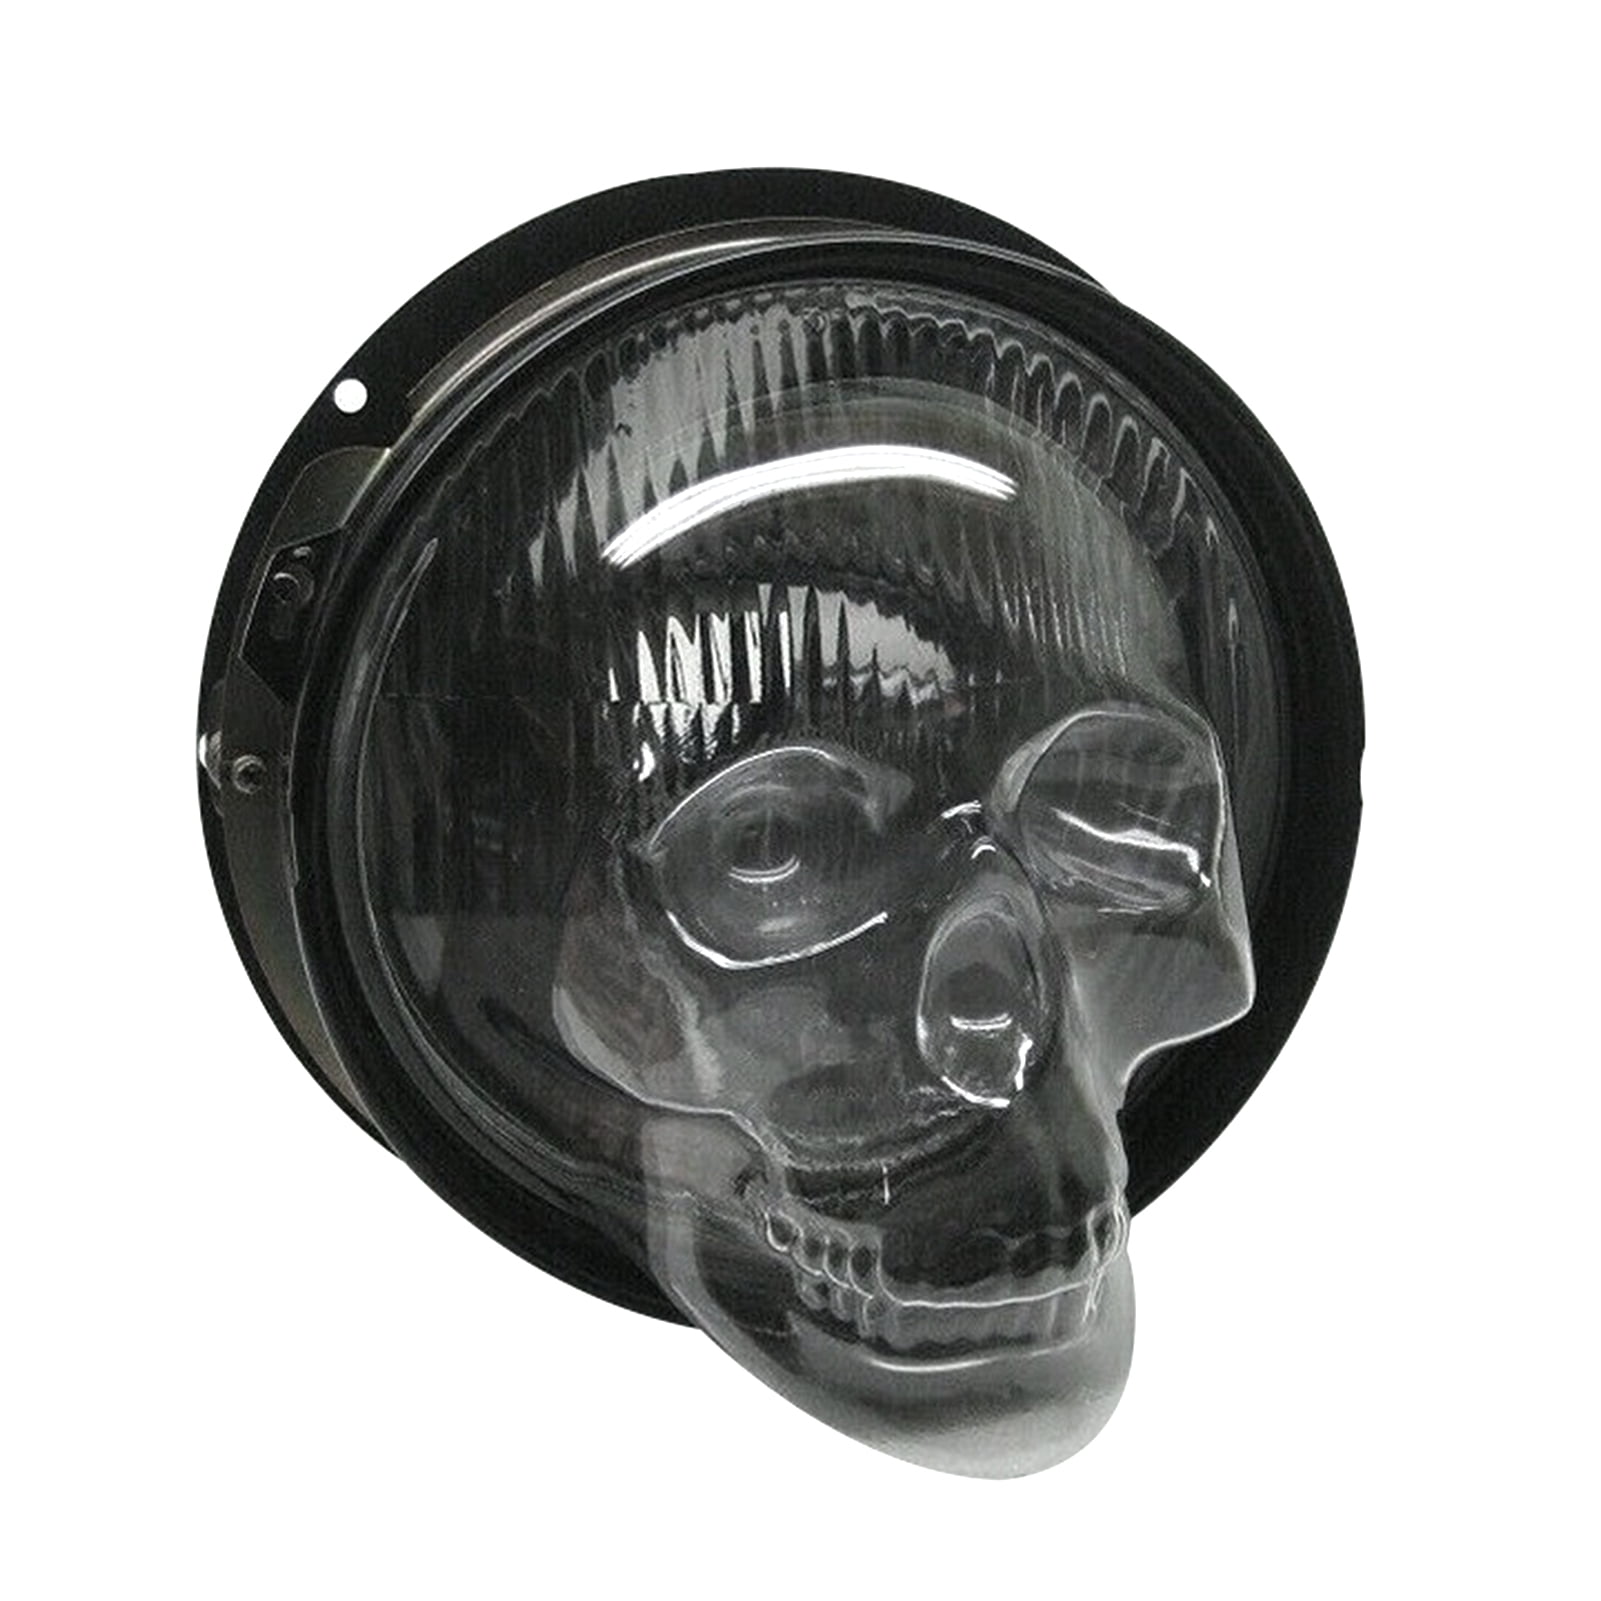 Skull Headlight Covers for Car Truck Auto Decor Protective Head Lamp Accessory 